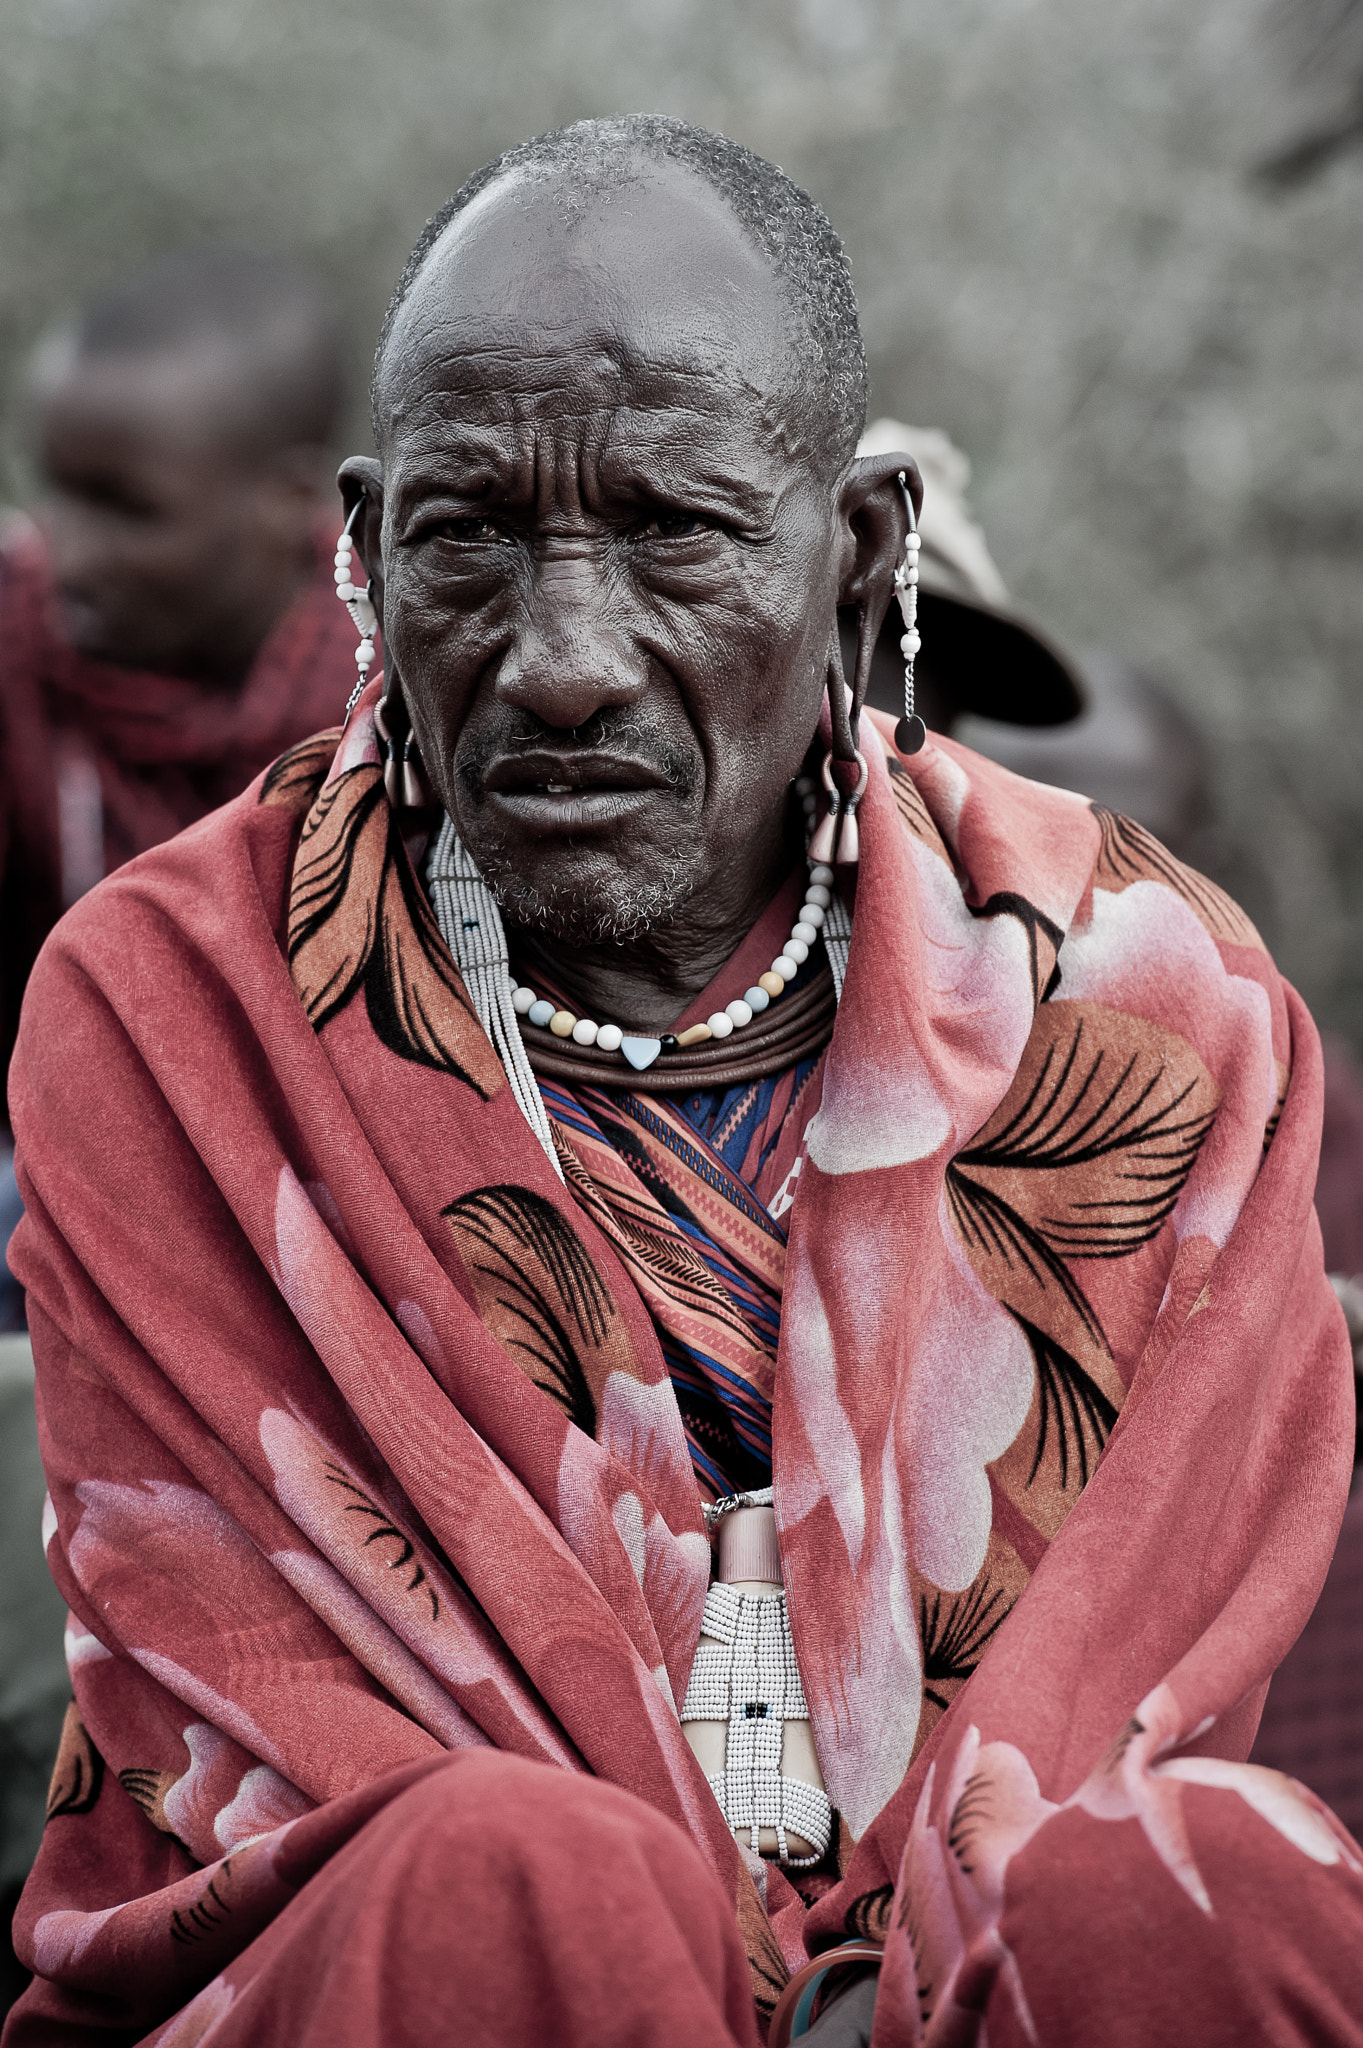 The maasai elder